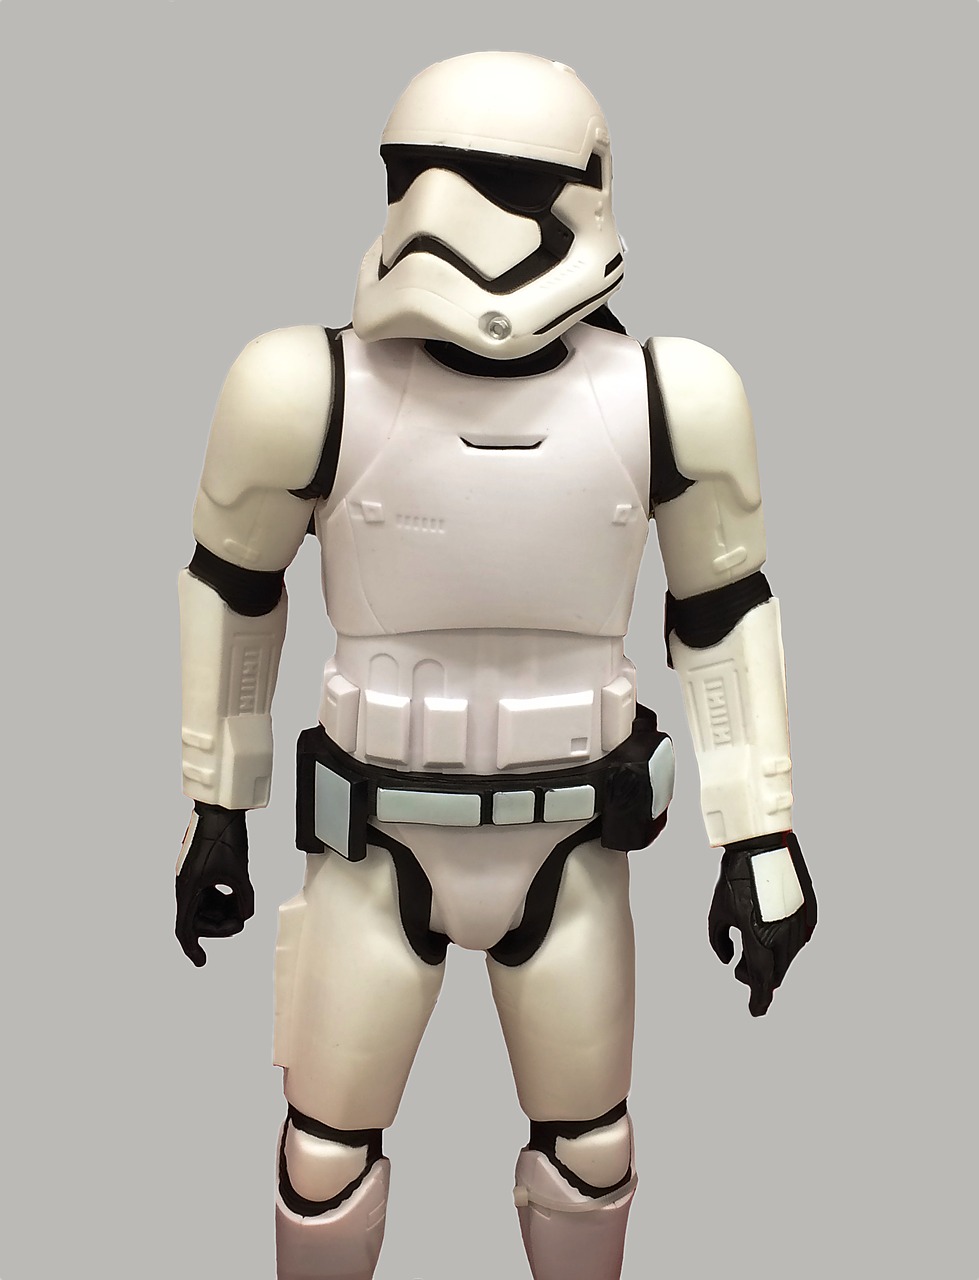 storm trooper star wars helmet free photo